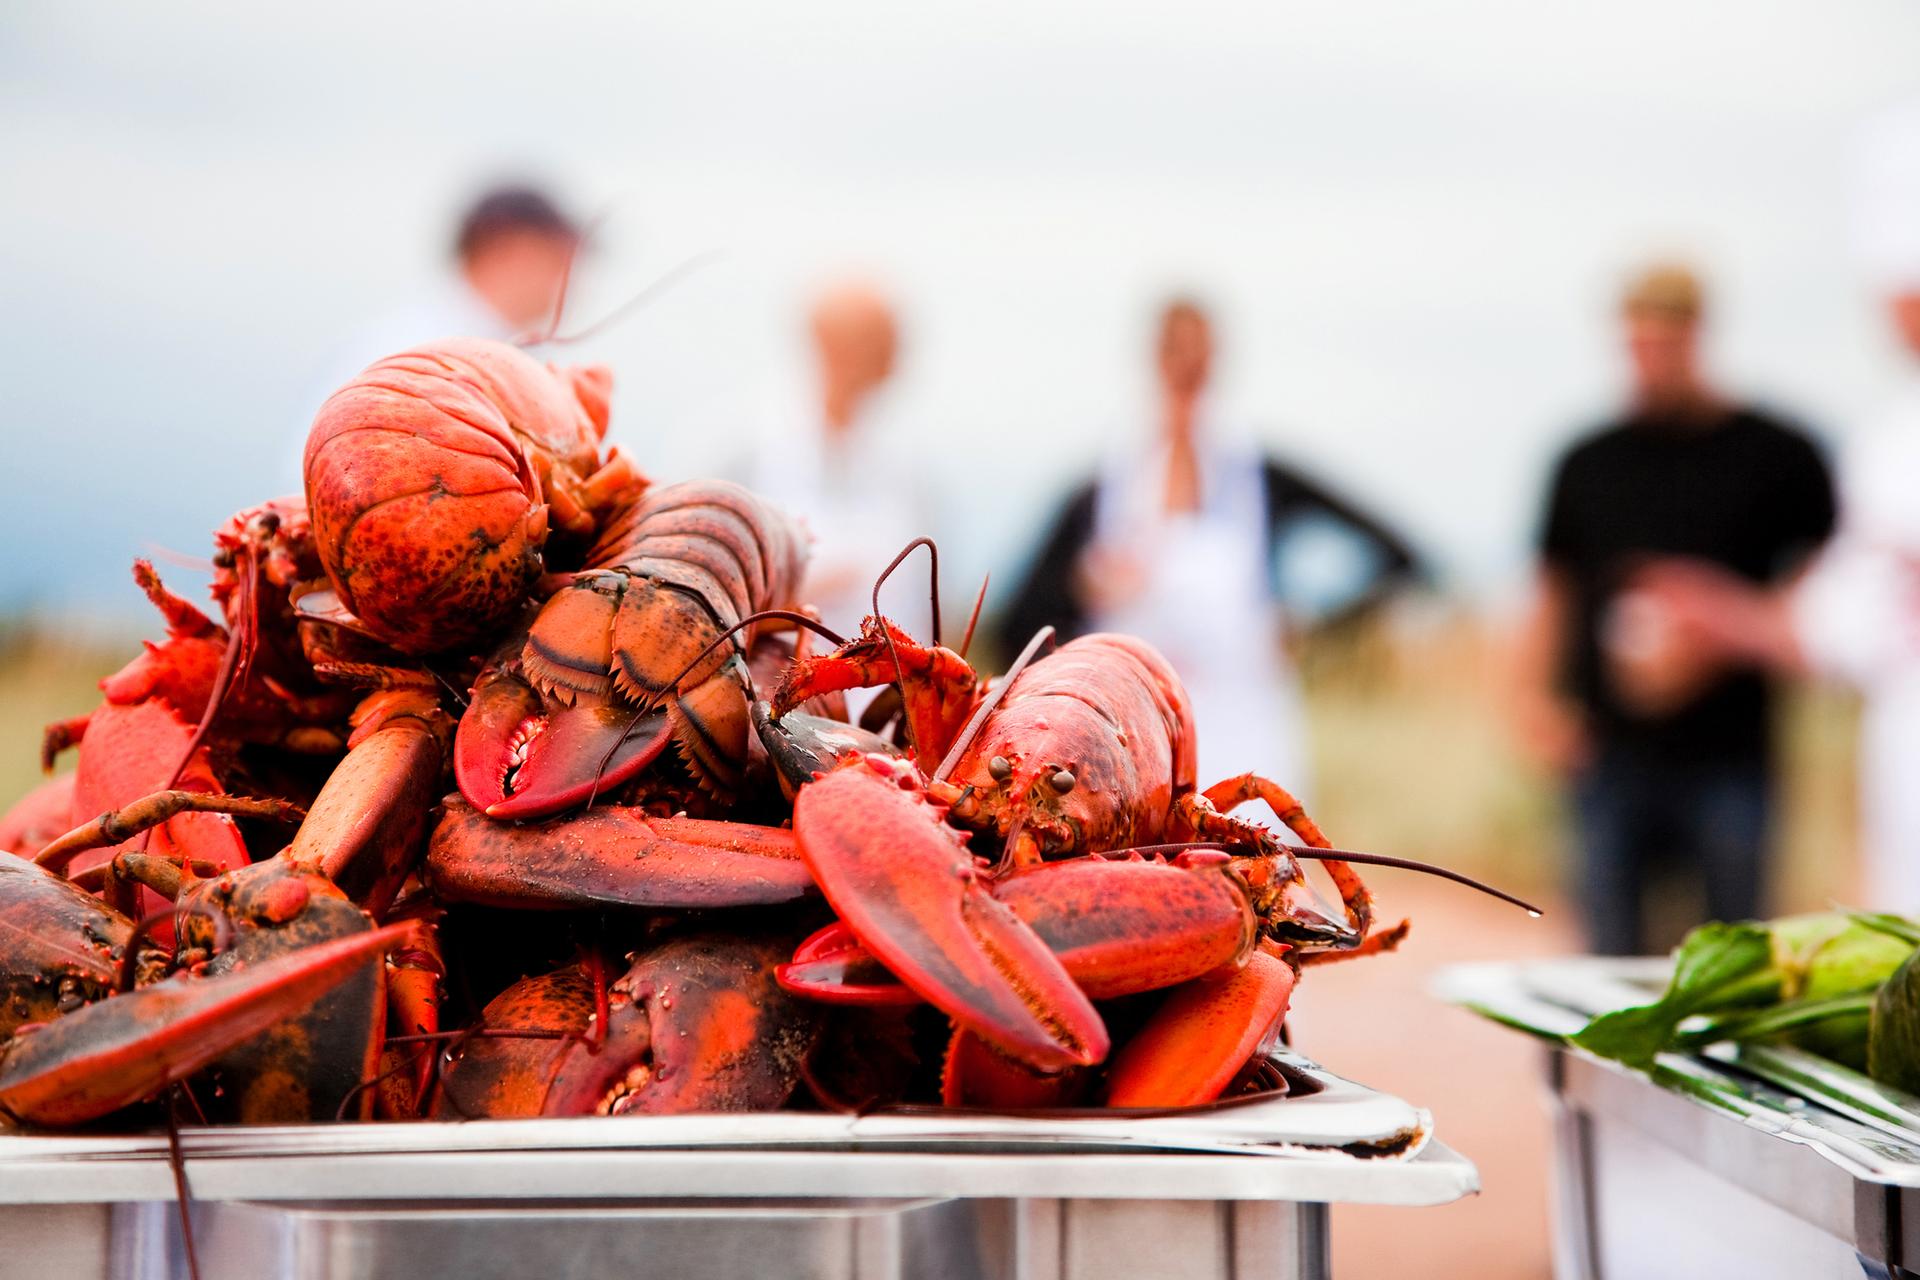 Lobster - Credit: Tourism PEI/Stephen Harris